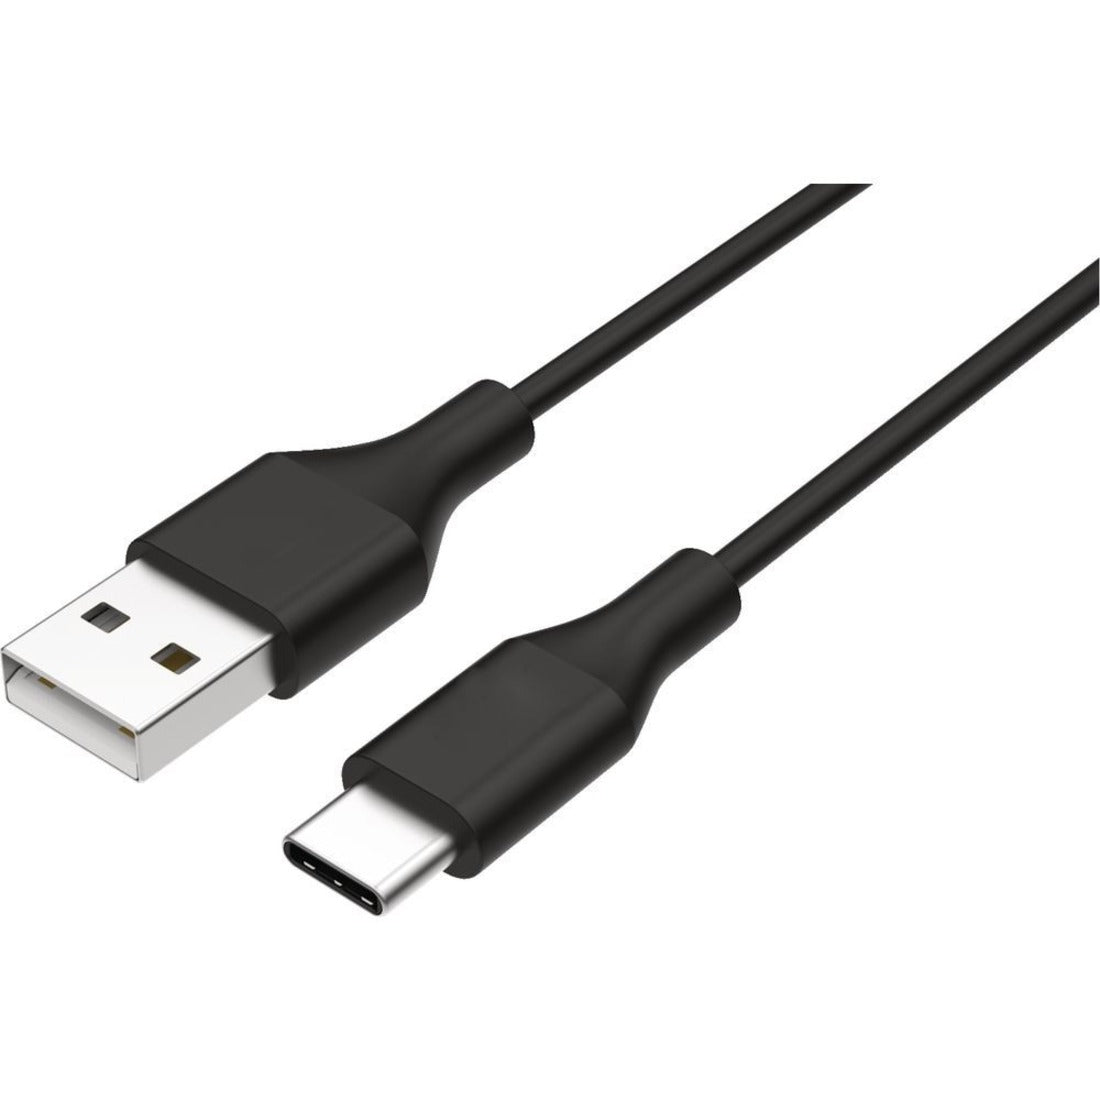 4XEM 4XSAMKITUSBCB6 Samsung USB-C 6FT Charger Kit (Black), 6ft Cable, 1 Year Warranty